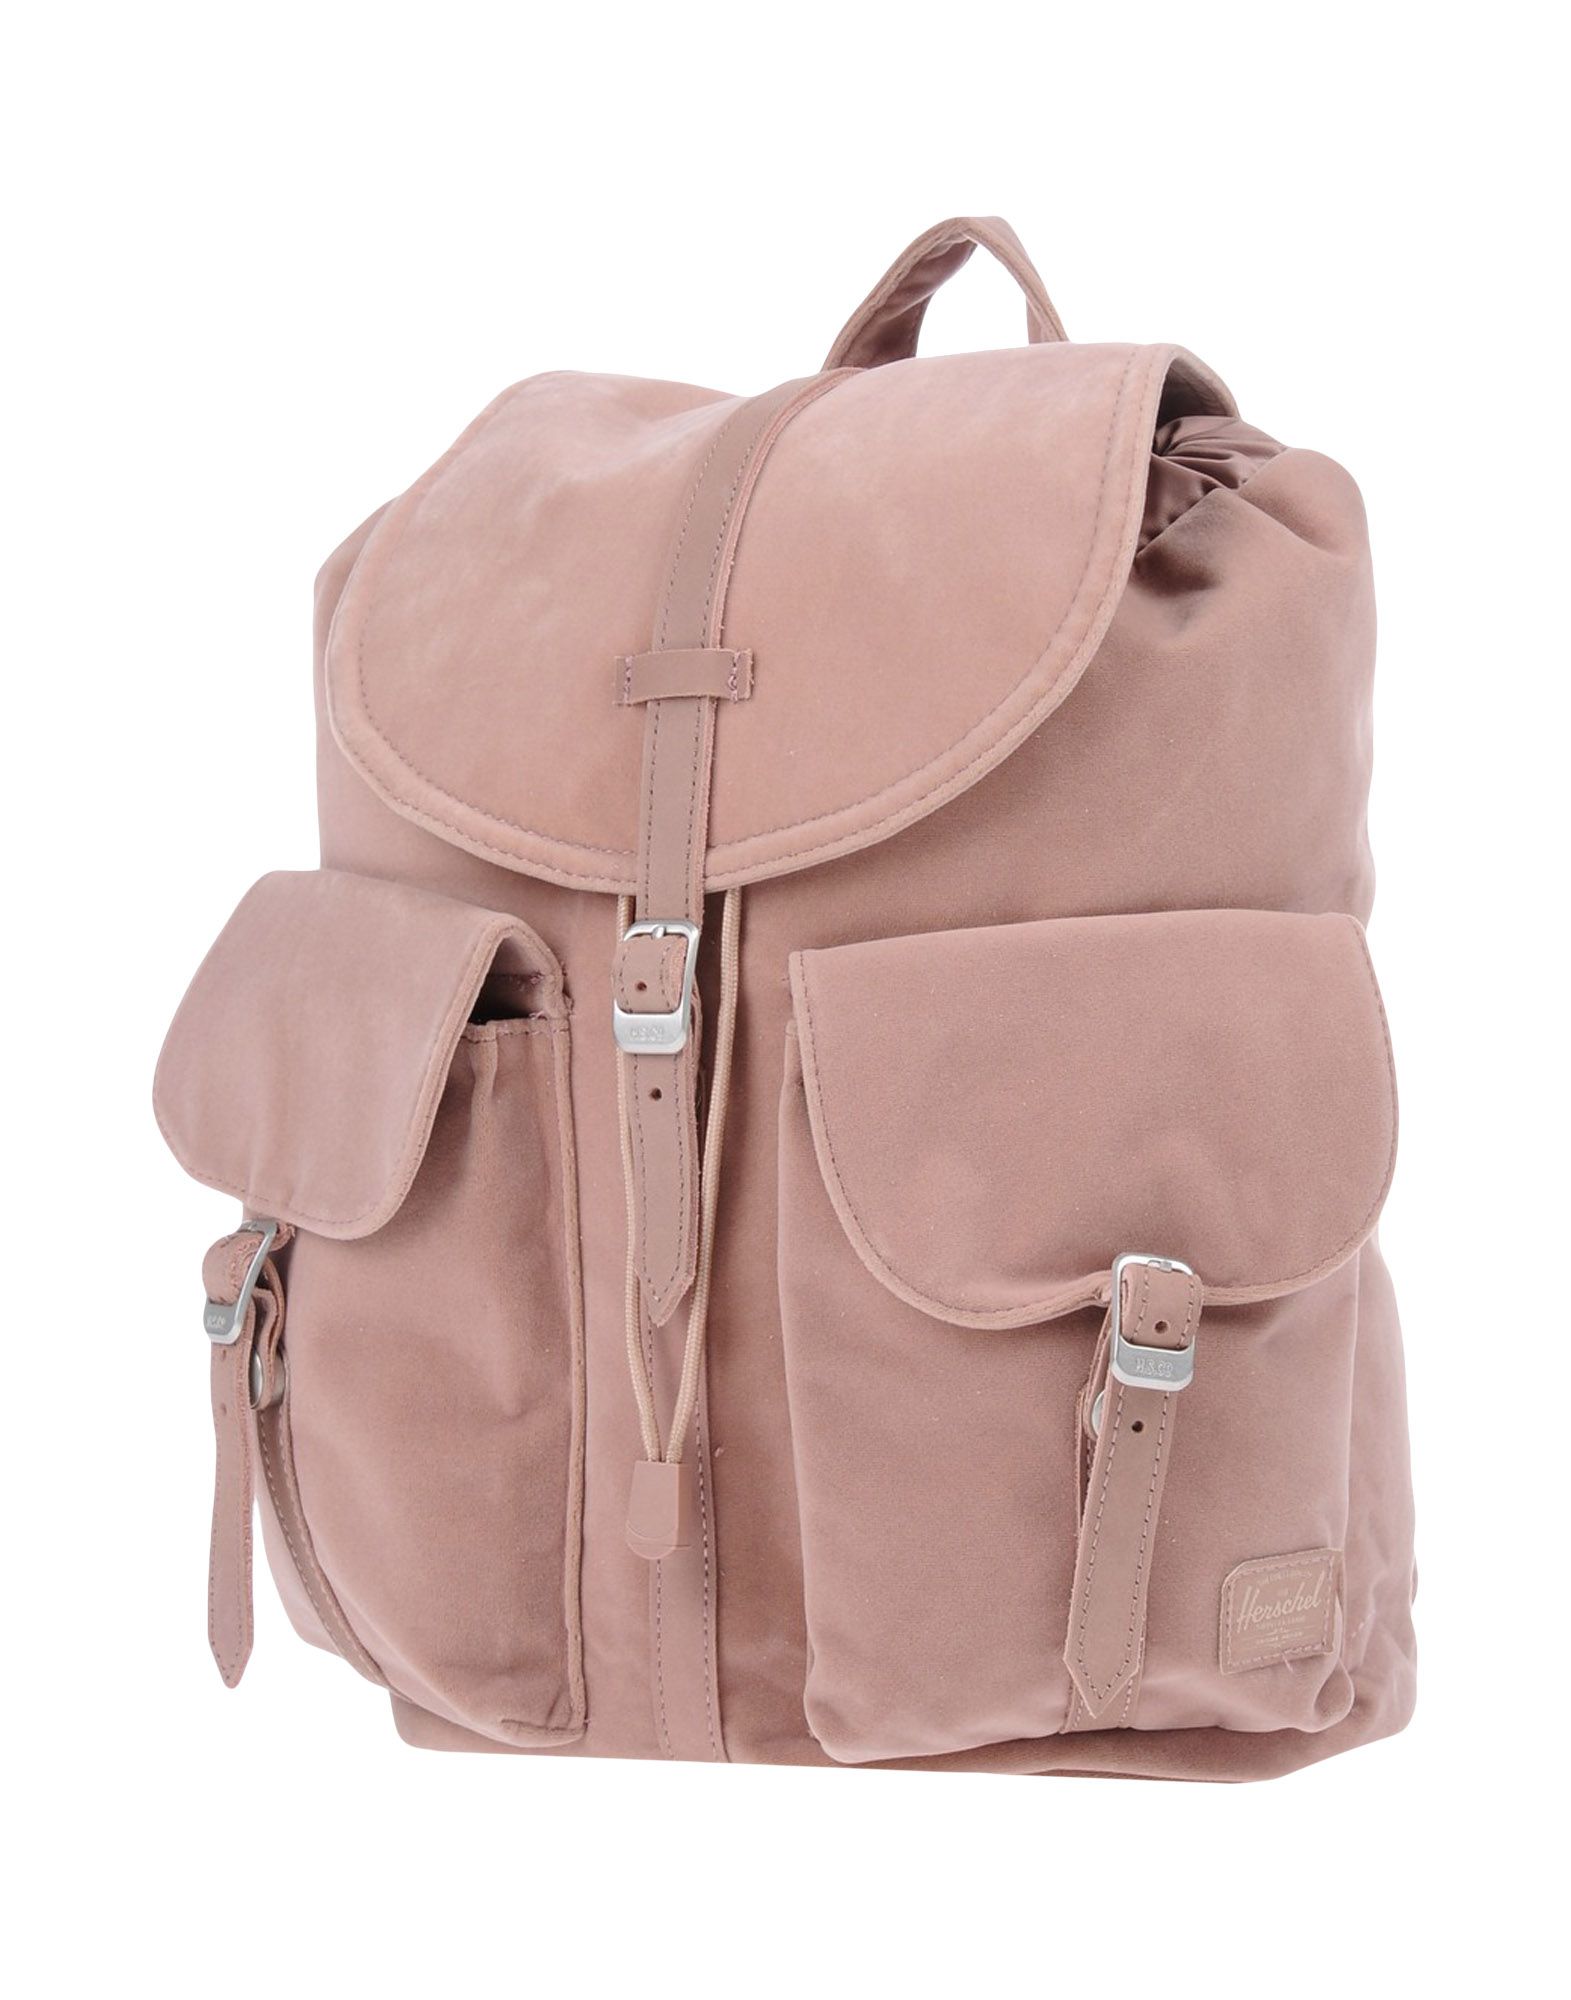 HERSCHEL SUPPLY CO Backpack & fanny pack,45402645FX 1